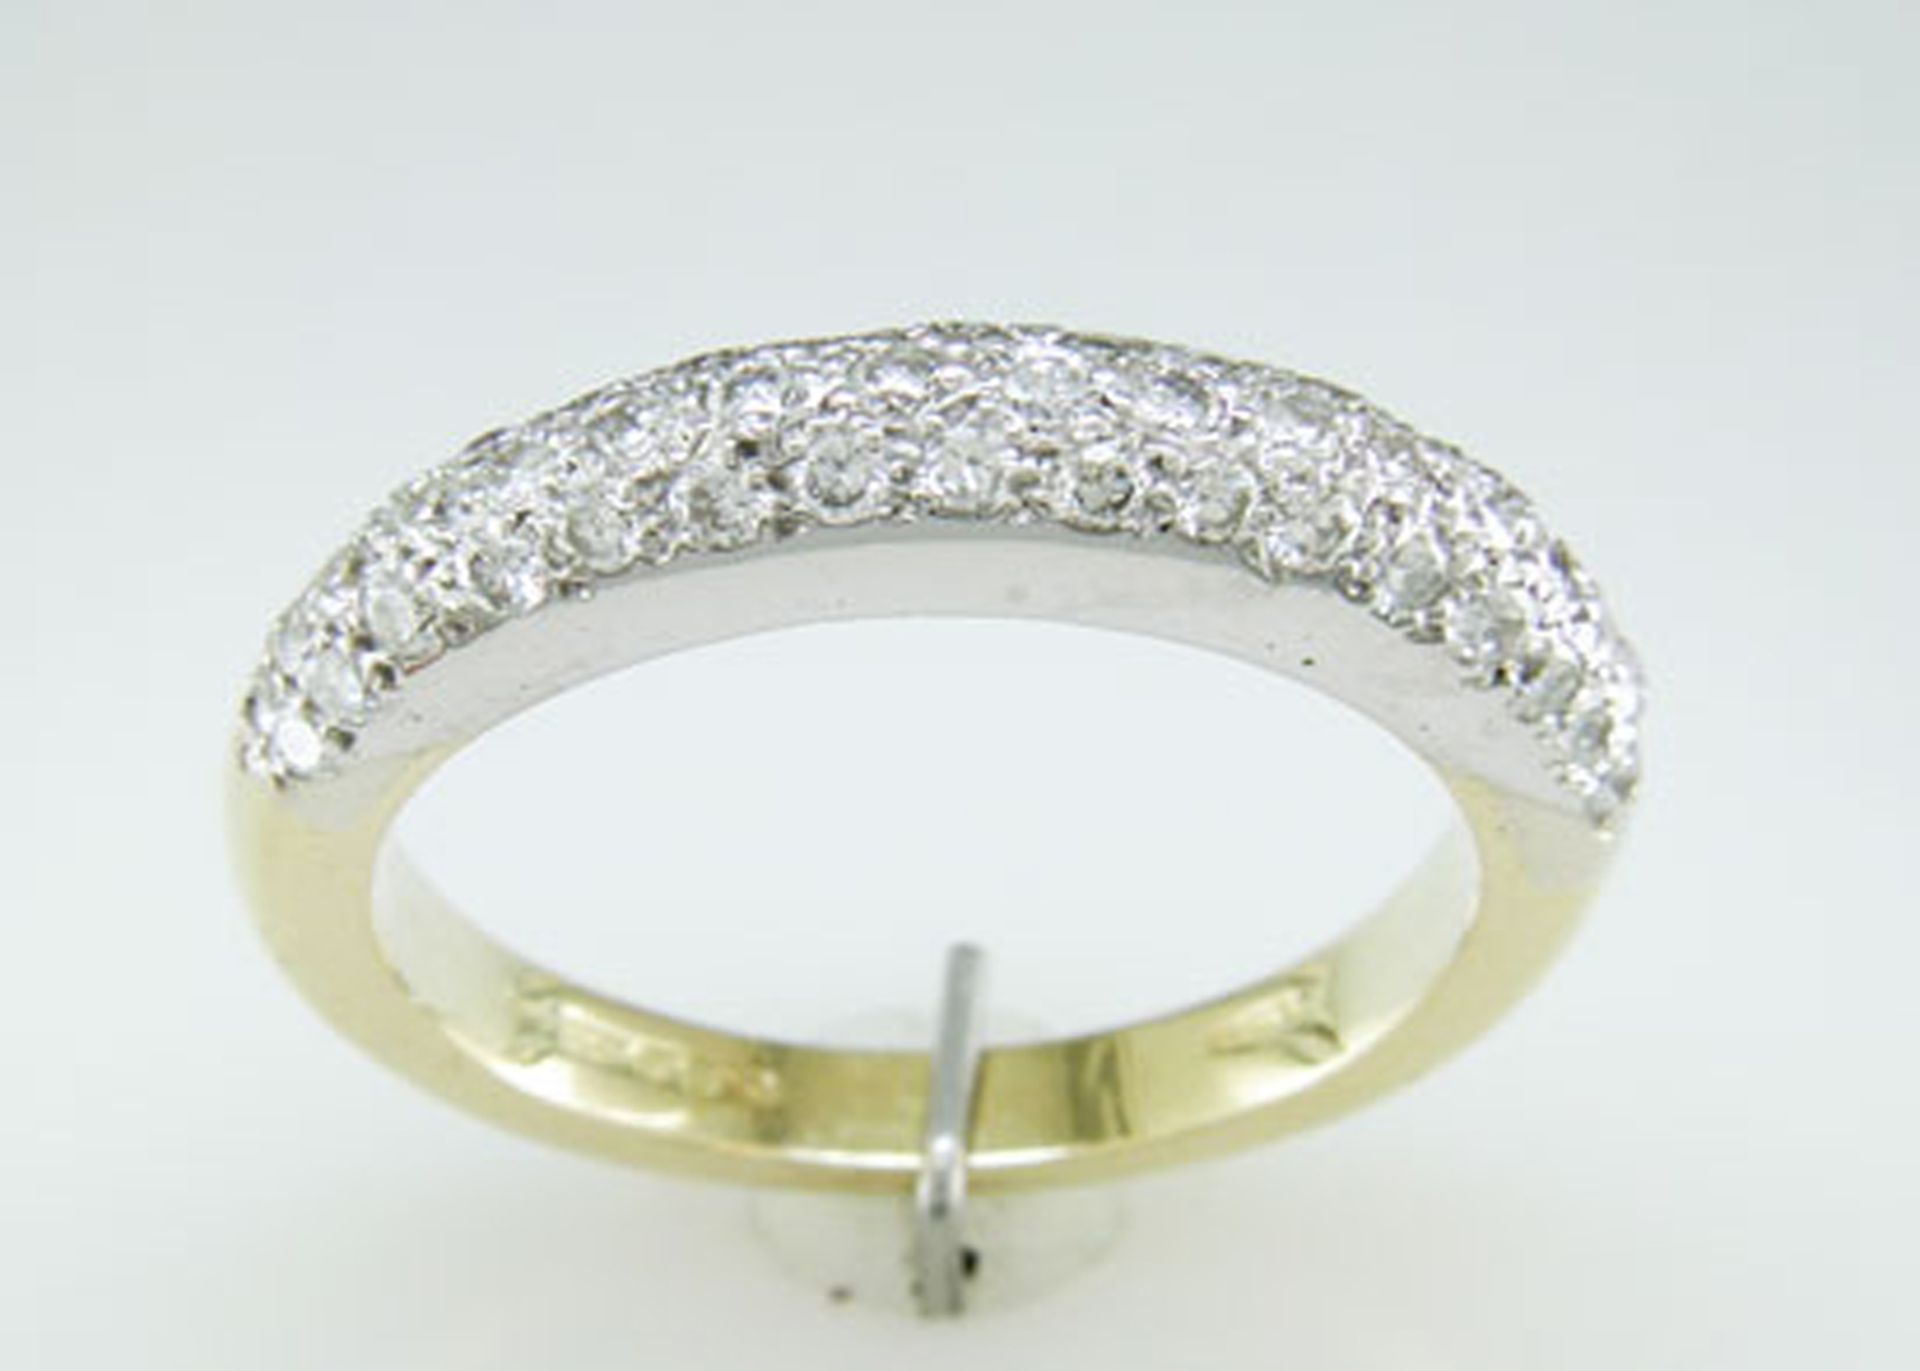 18ct Wedding Band Diamond Ring E VVS2 1.58 Carats - Image 3 of 4